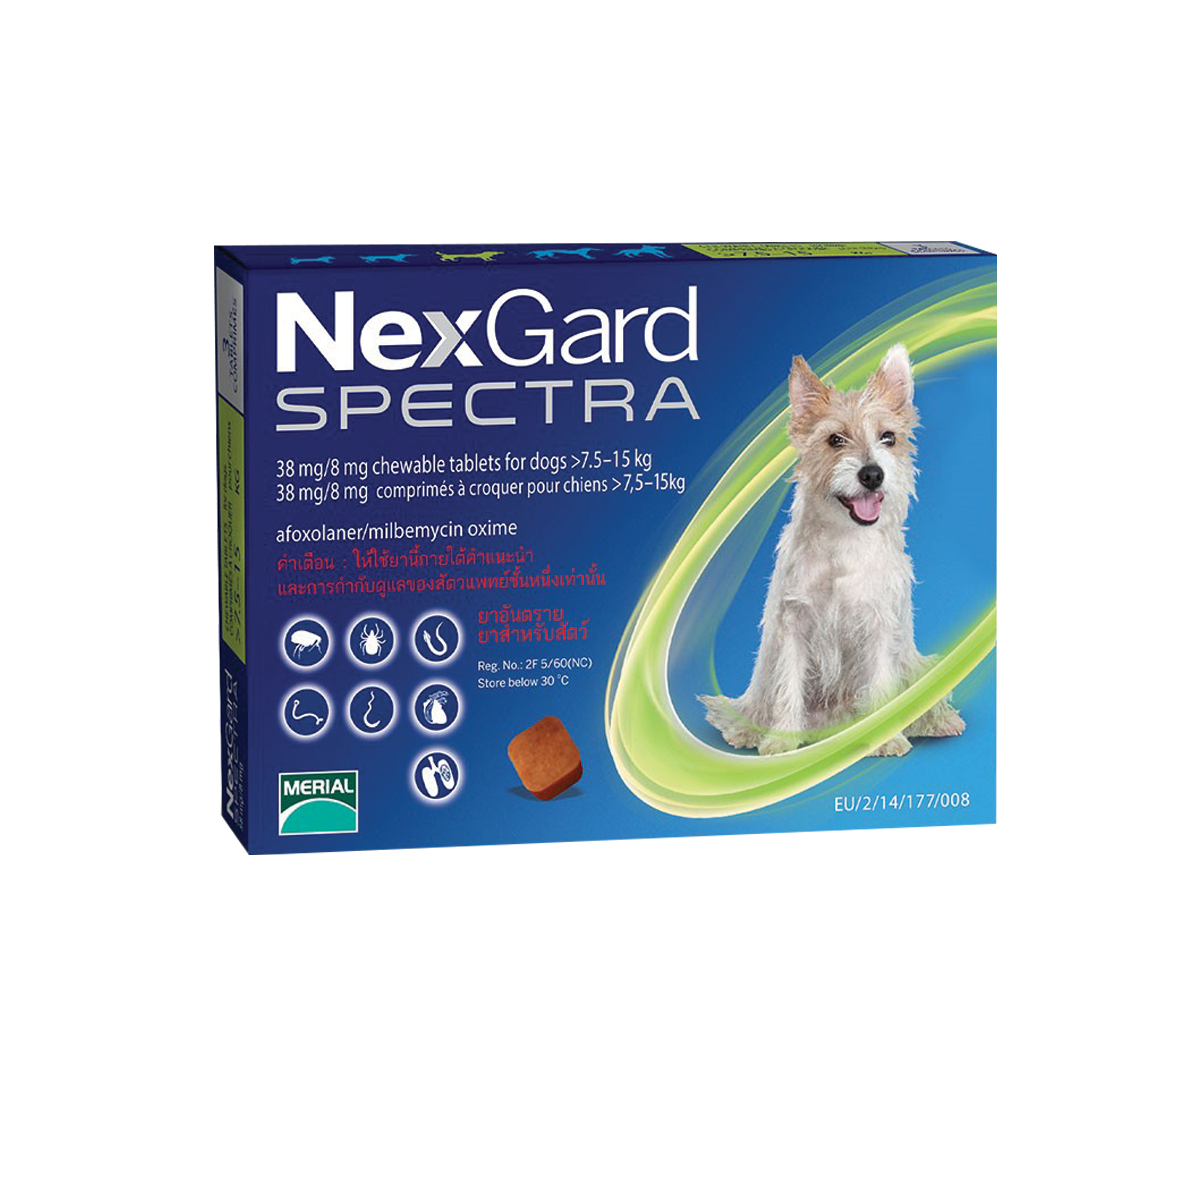 NexGard Spectra Chewable Tablets For Medium Dogs เน็กการ์ด สเป็คต้าร์ ยากำจัดเห็บ หมัด สุนัข ชนิดเม็ดเคี้ยว สำหรับสุนัขที่มีน้ำหนัก 7.5-15 กิโลกรัม